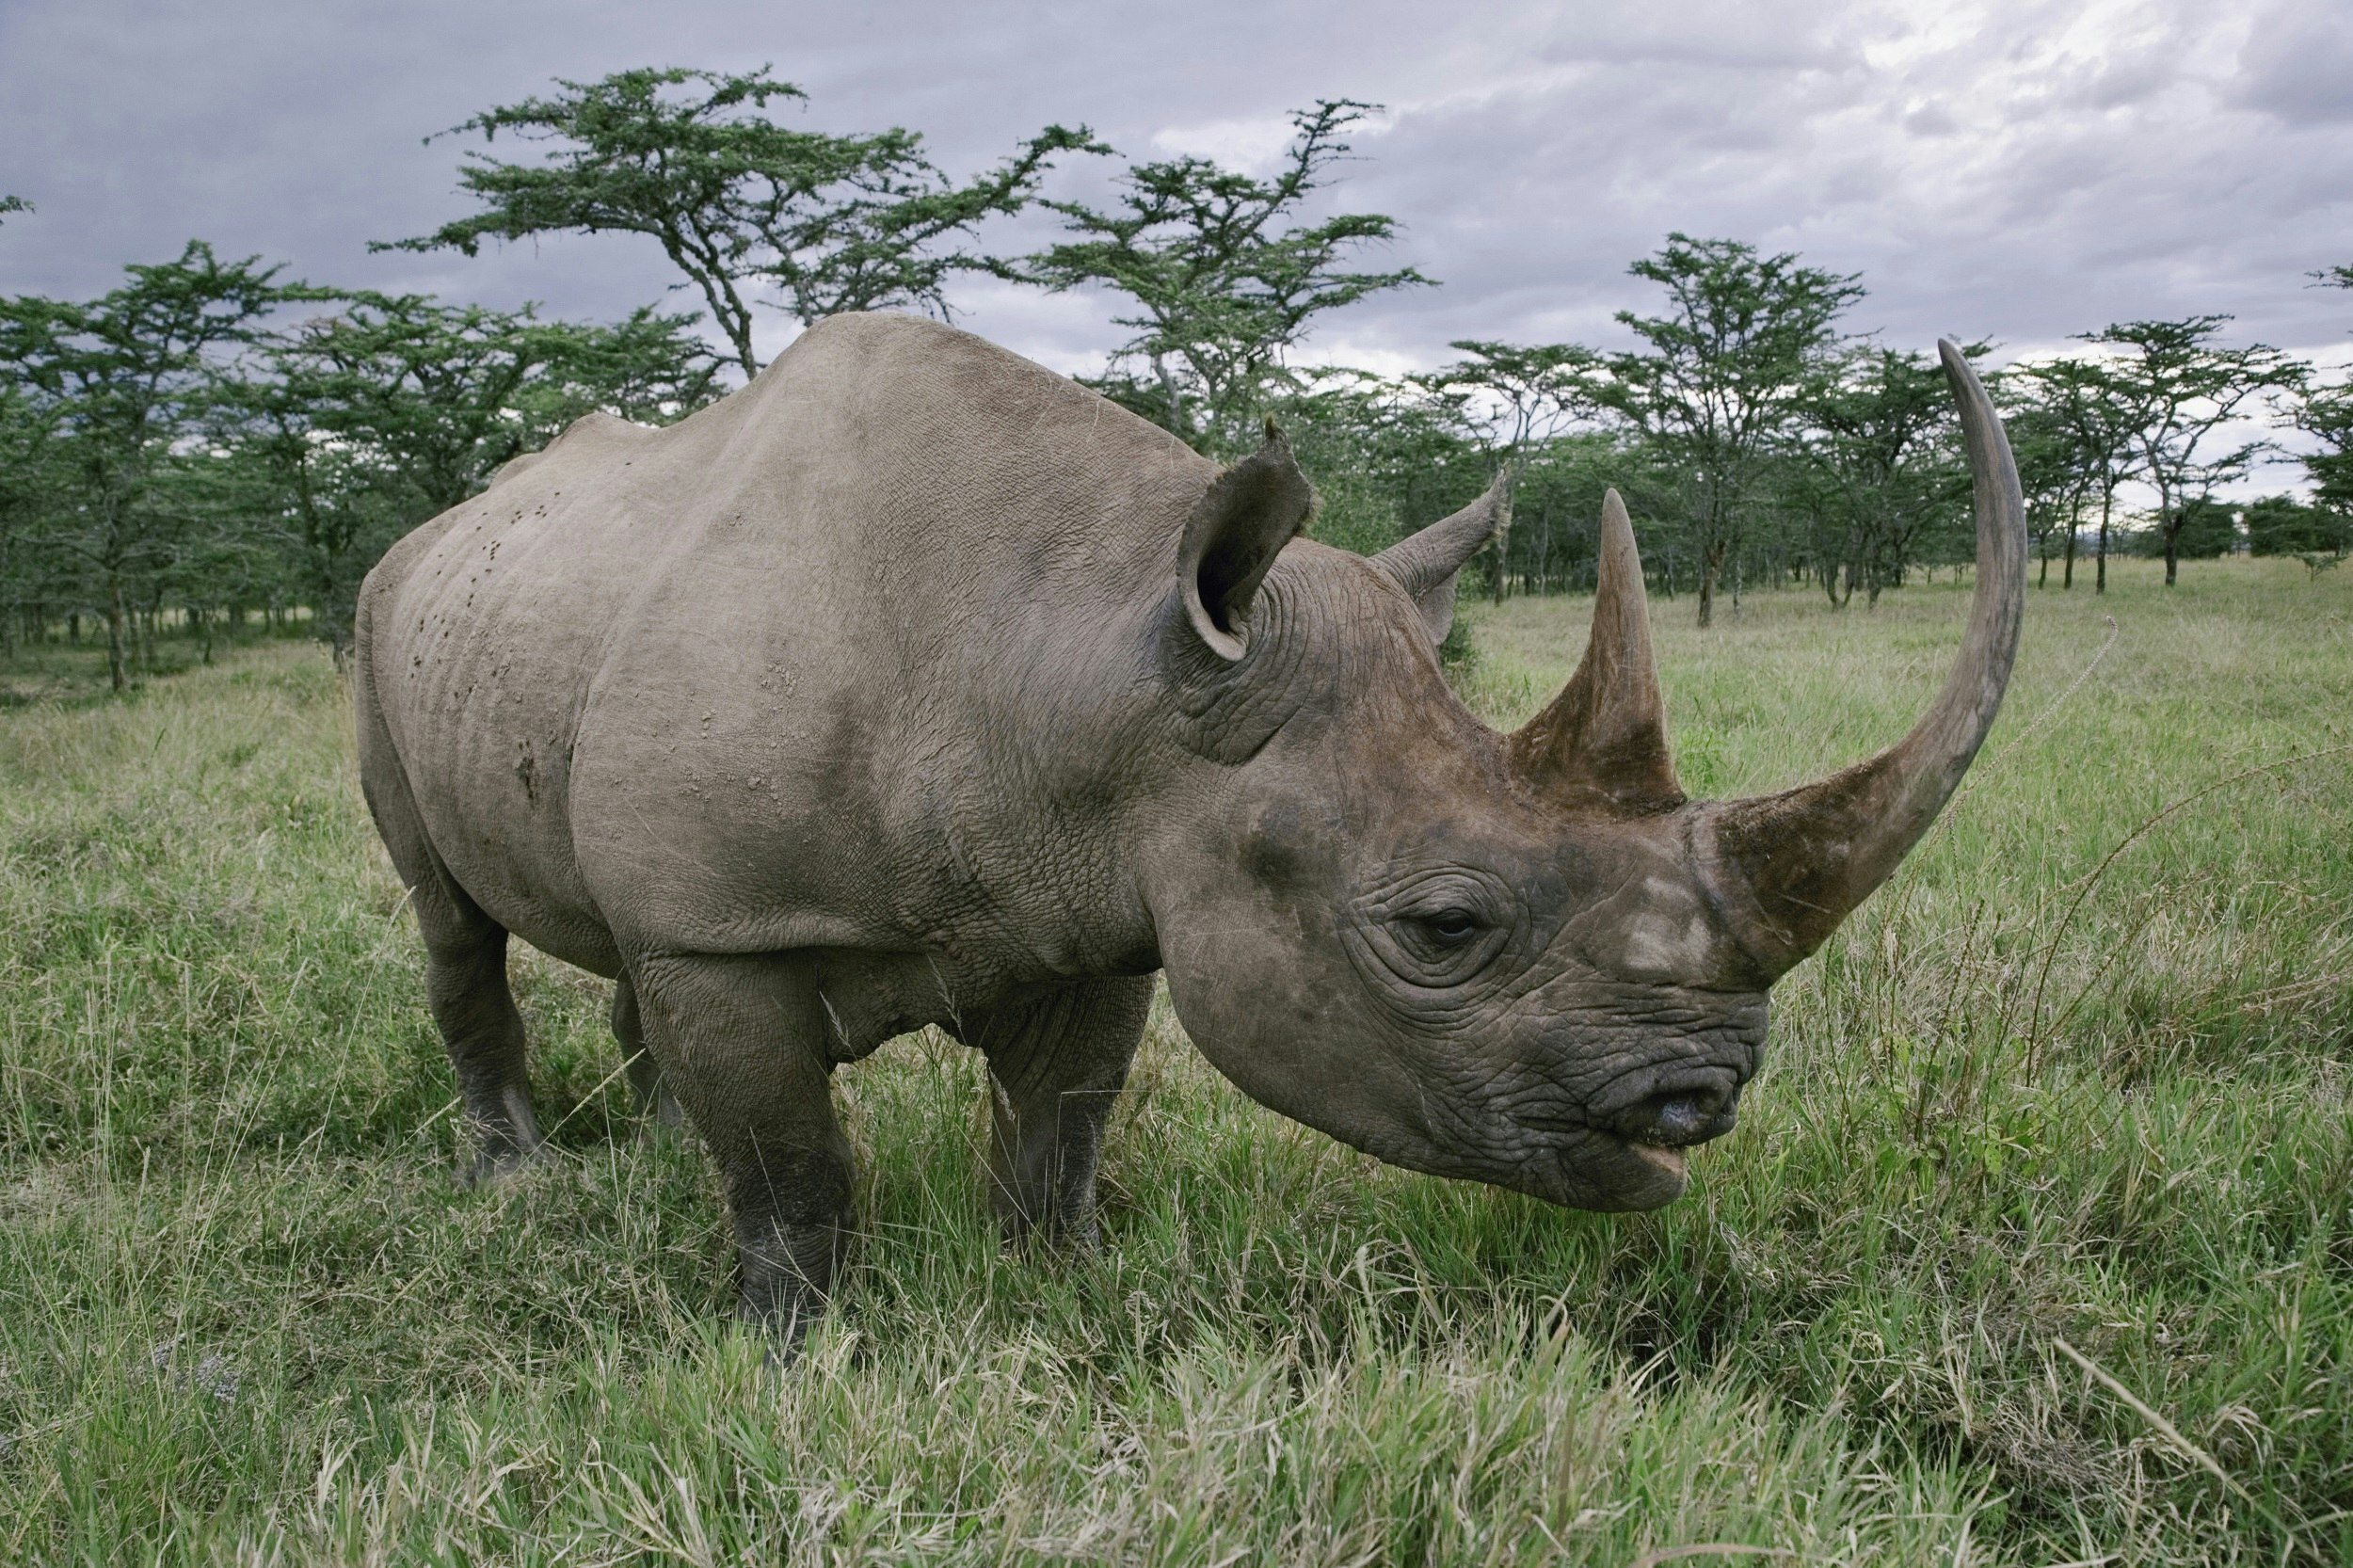 A close-up of a black rhino standing alone in grassland